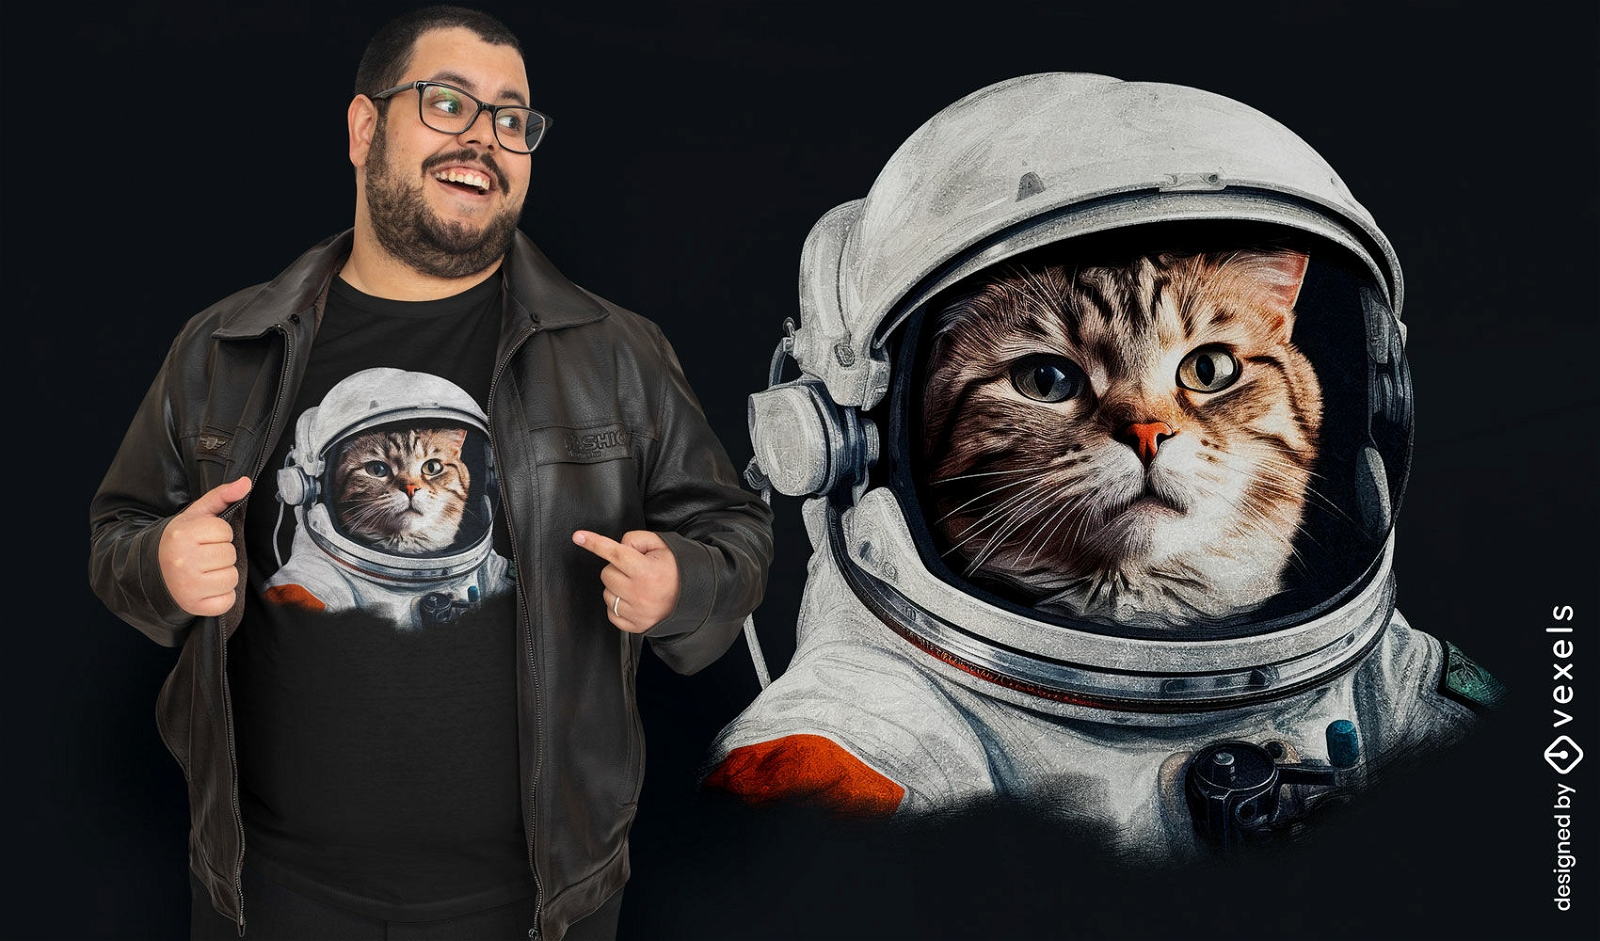 Diseño de camiseta de gato astronauta realista.